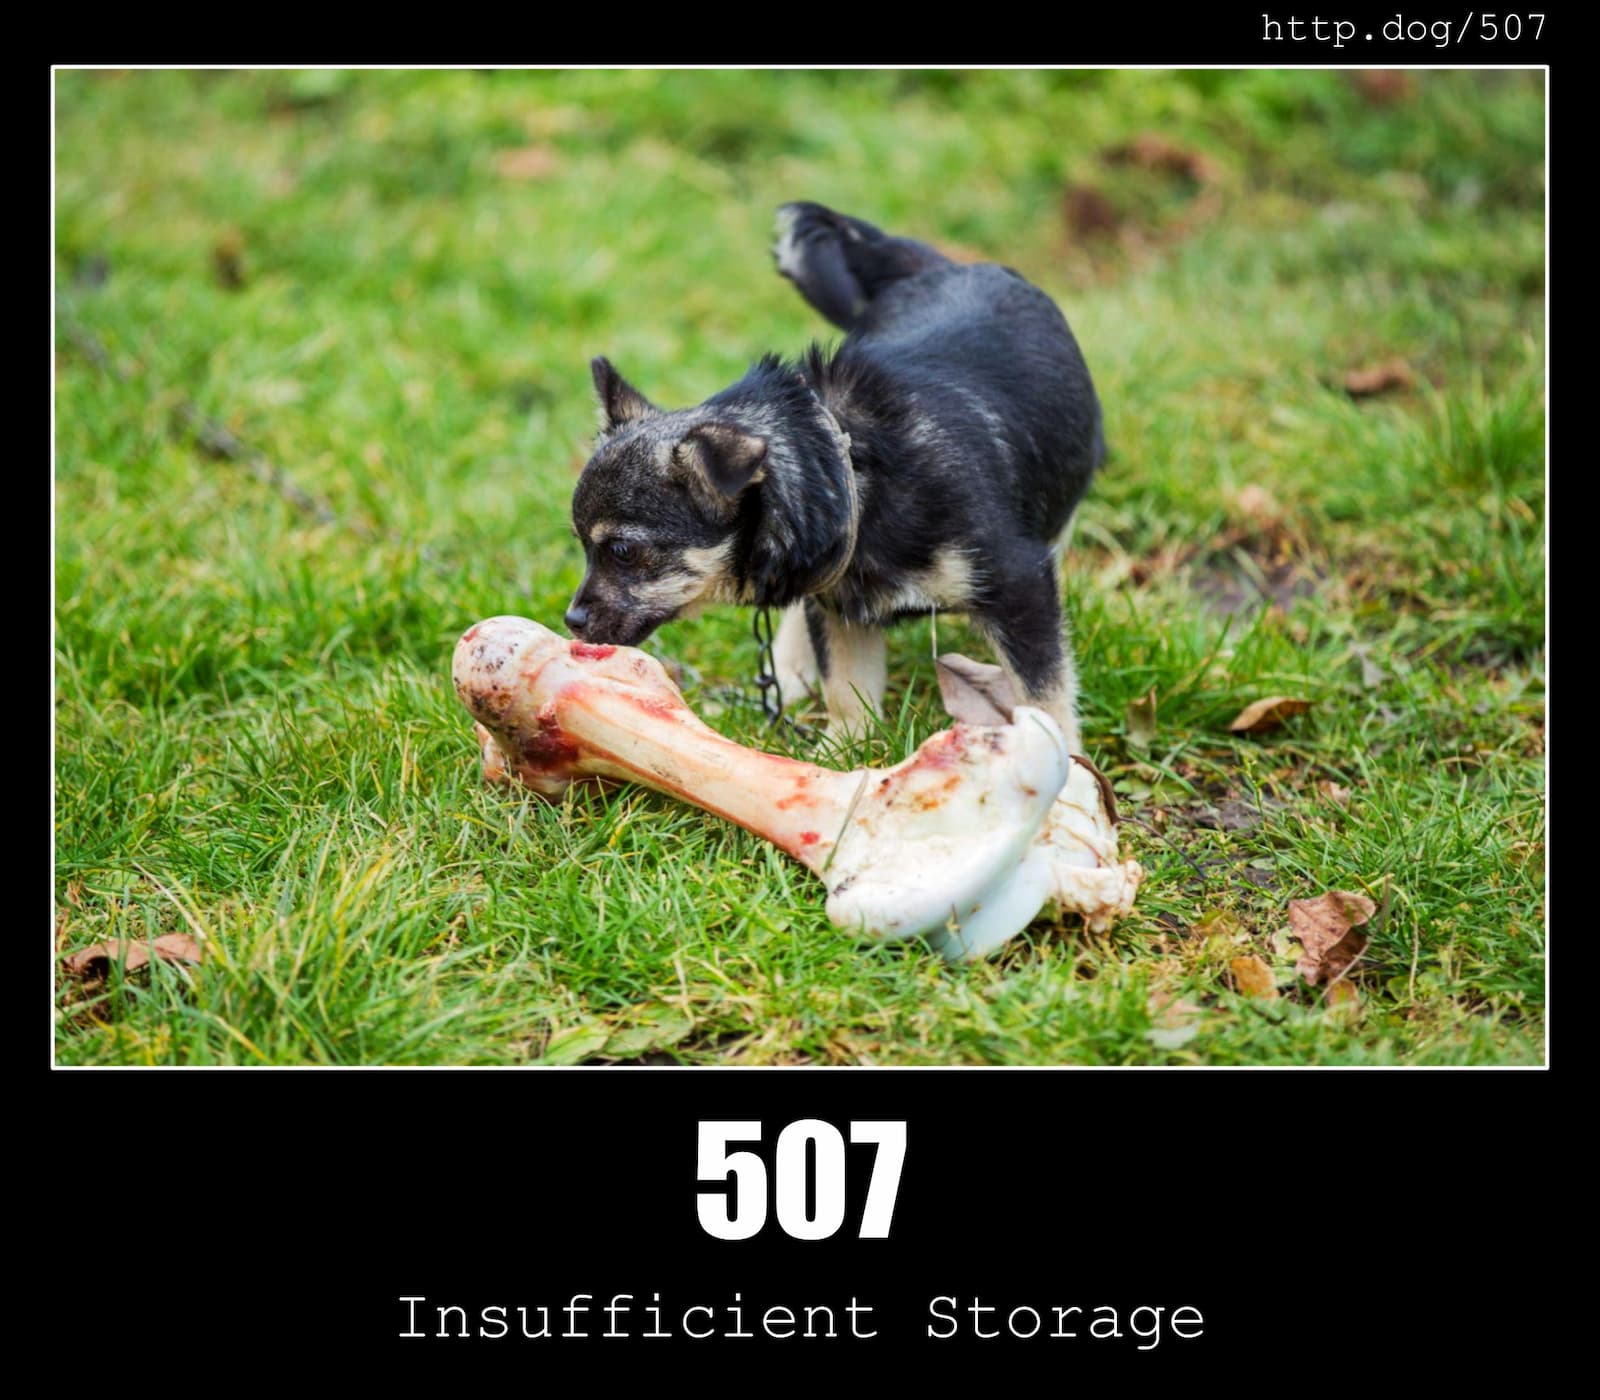 HTTP Status Code 507 Insufficient Storage & Dogs